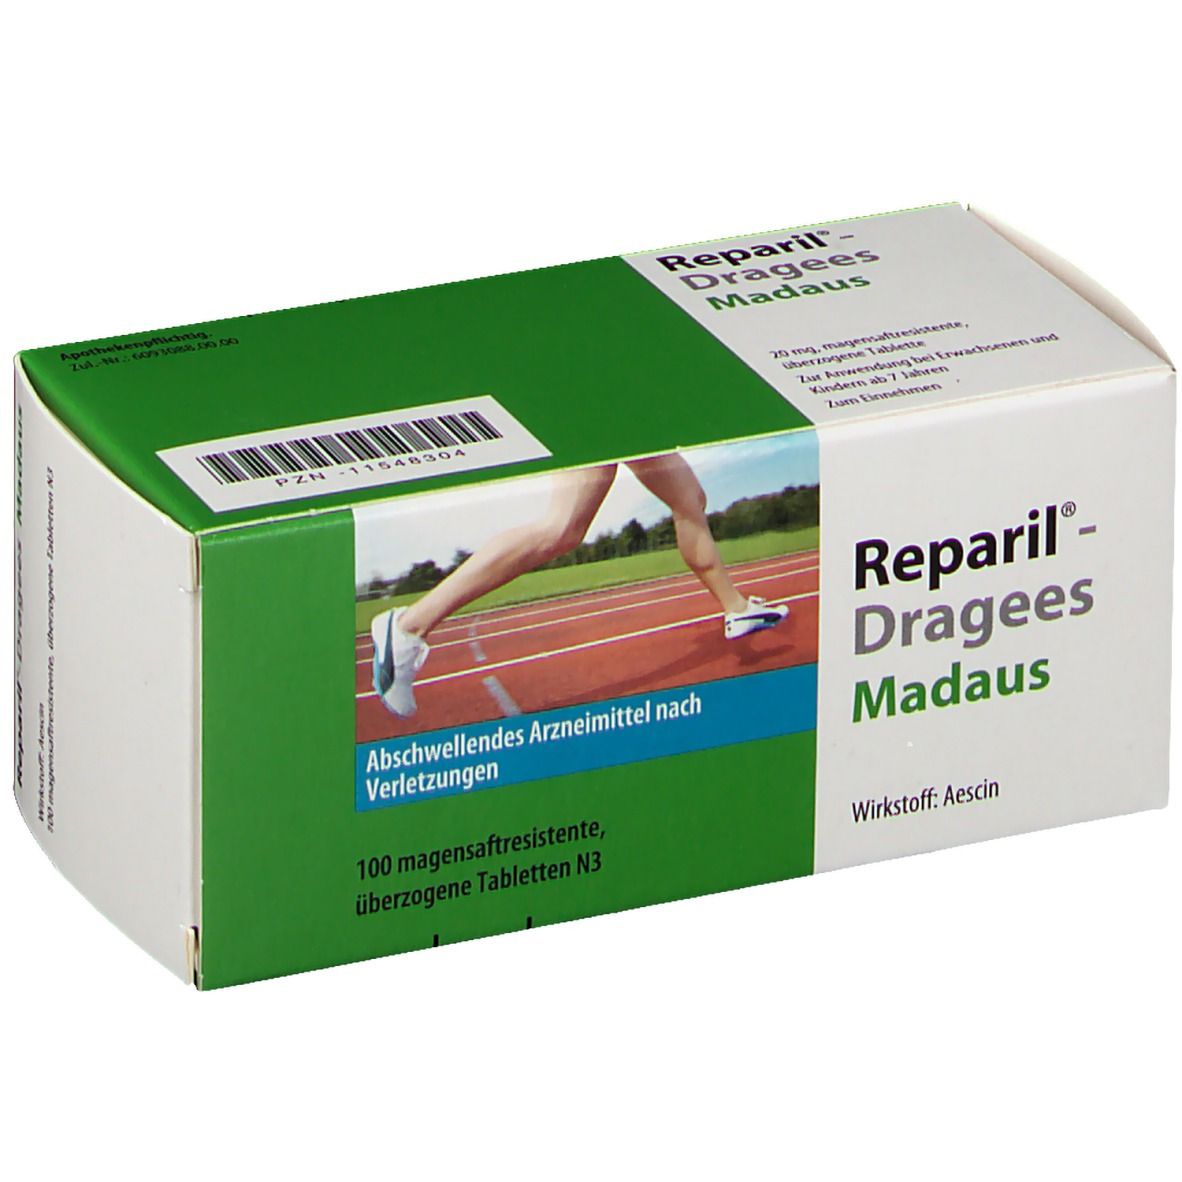 Reparil®-Dragees Madaus